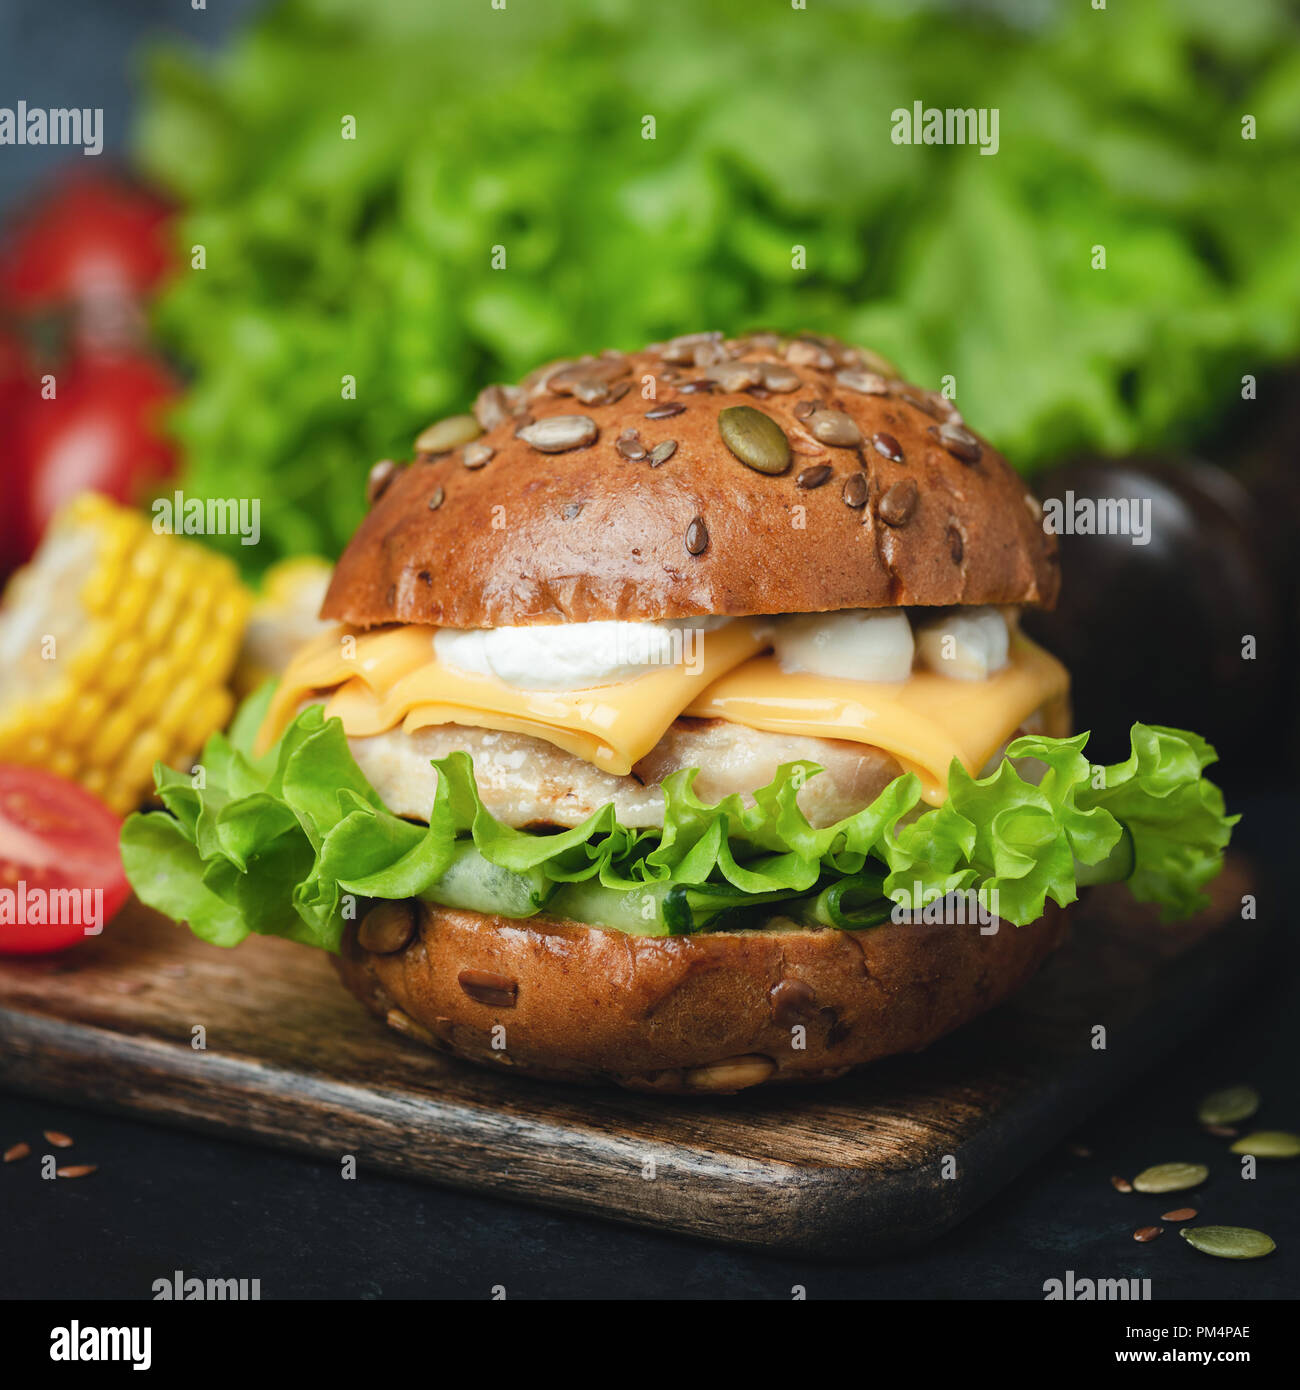 Chicken Cheeseburger with green salad and sauce. Closeup view. Tasty Cheeseburger Stock Photo